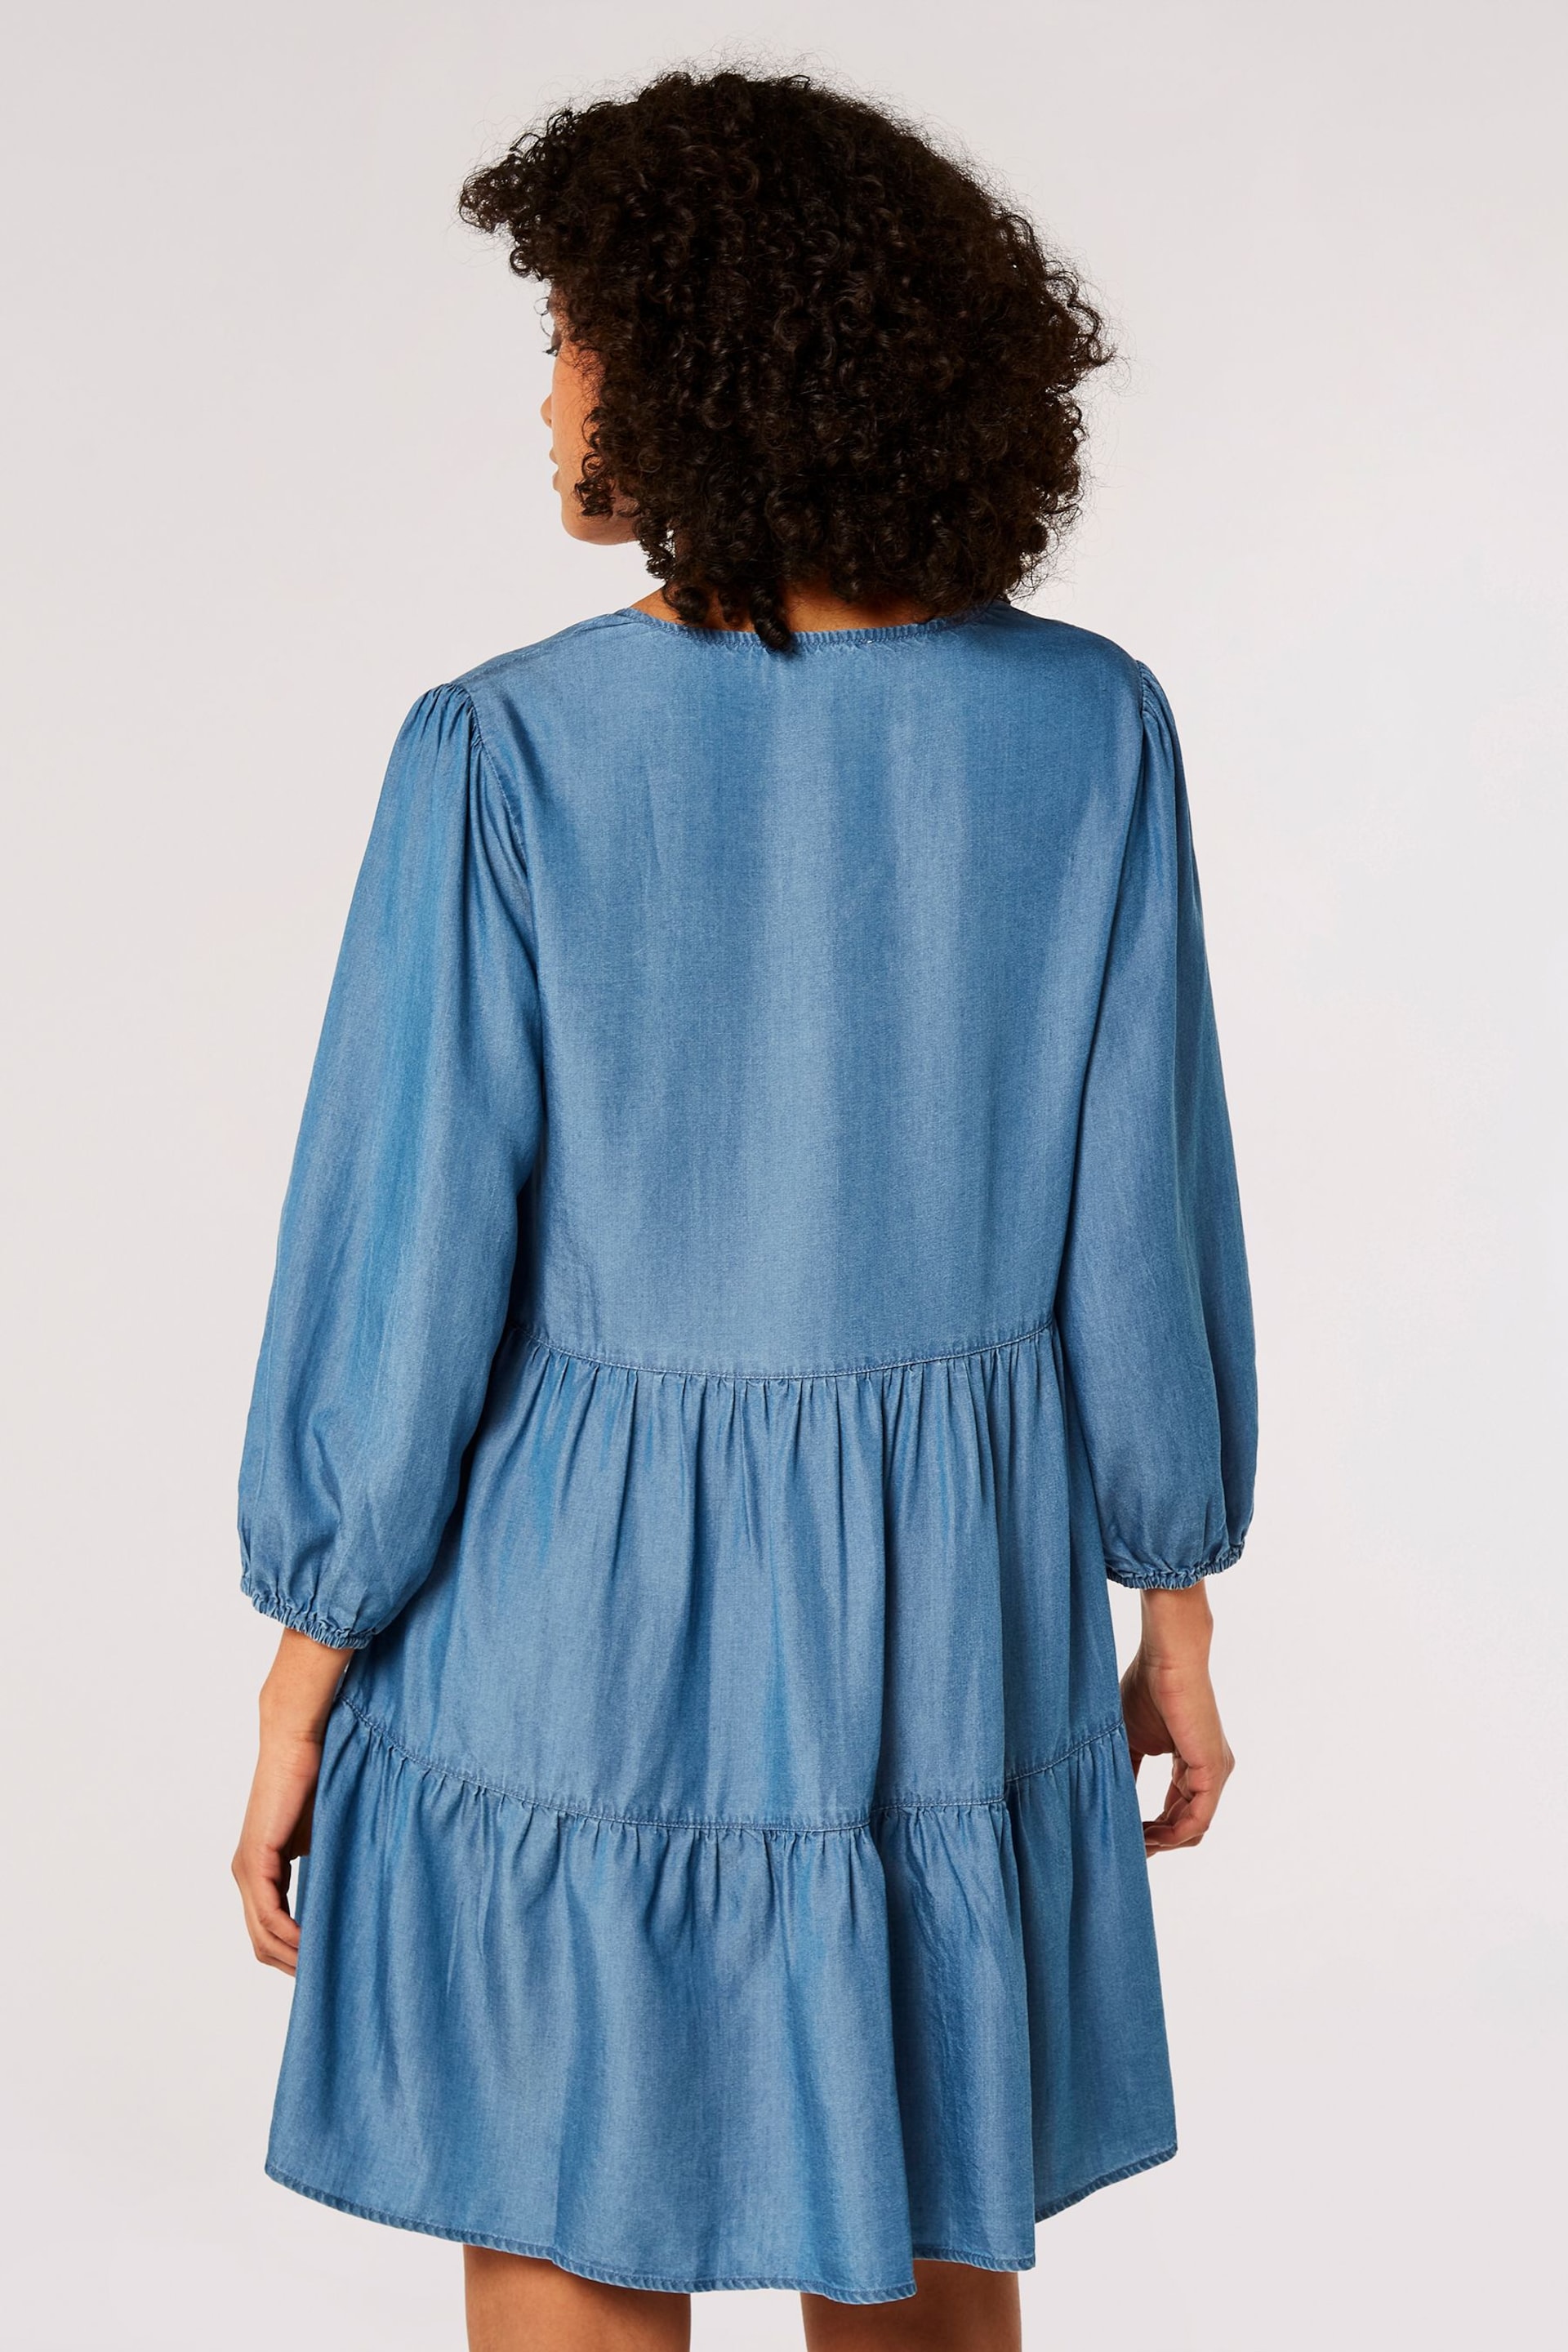 Apricot Blue Denim Tiered Dress - Image 2 of 4